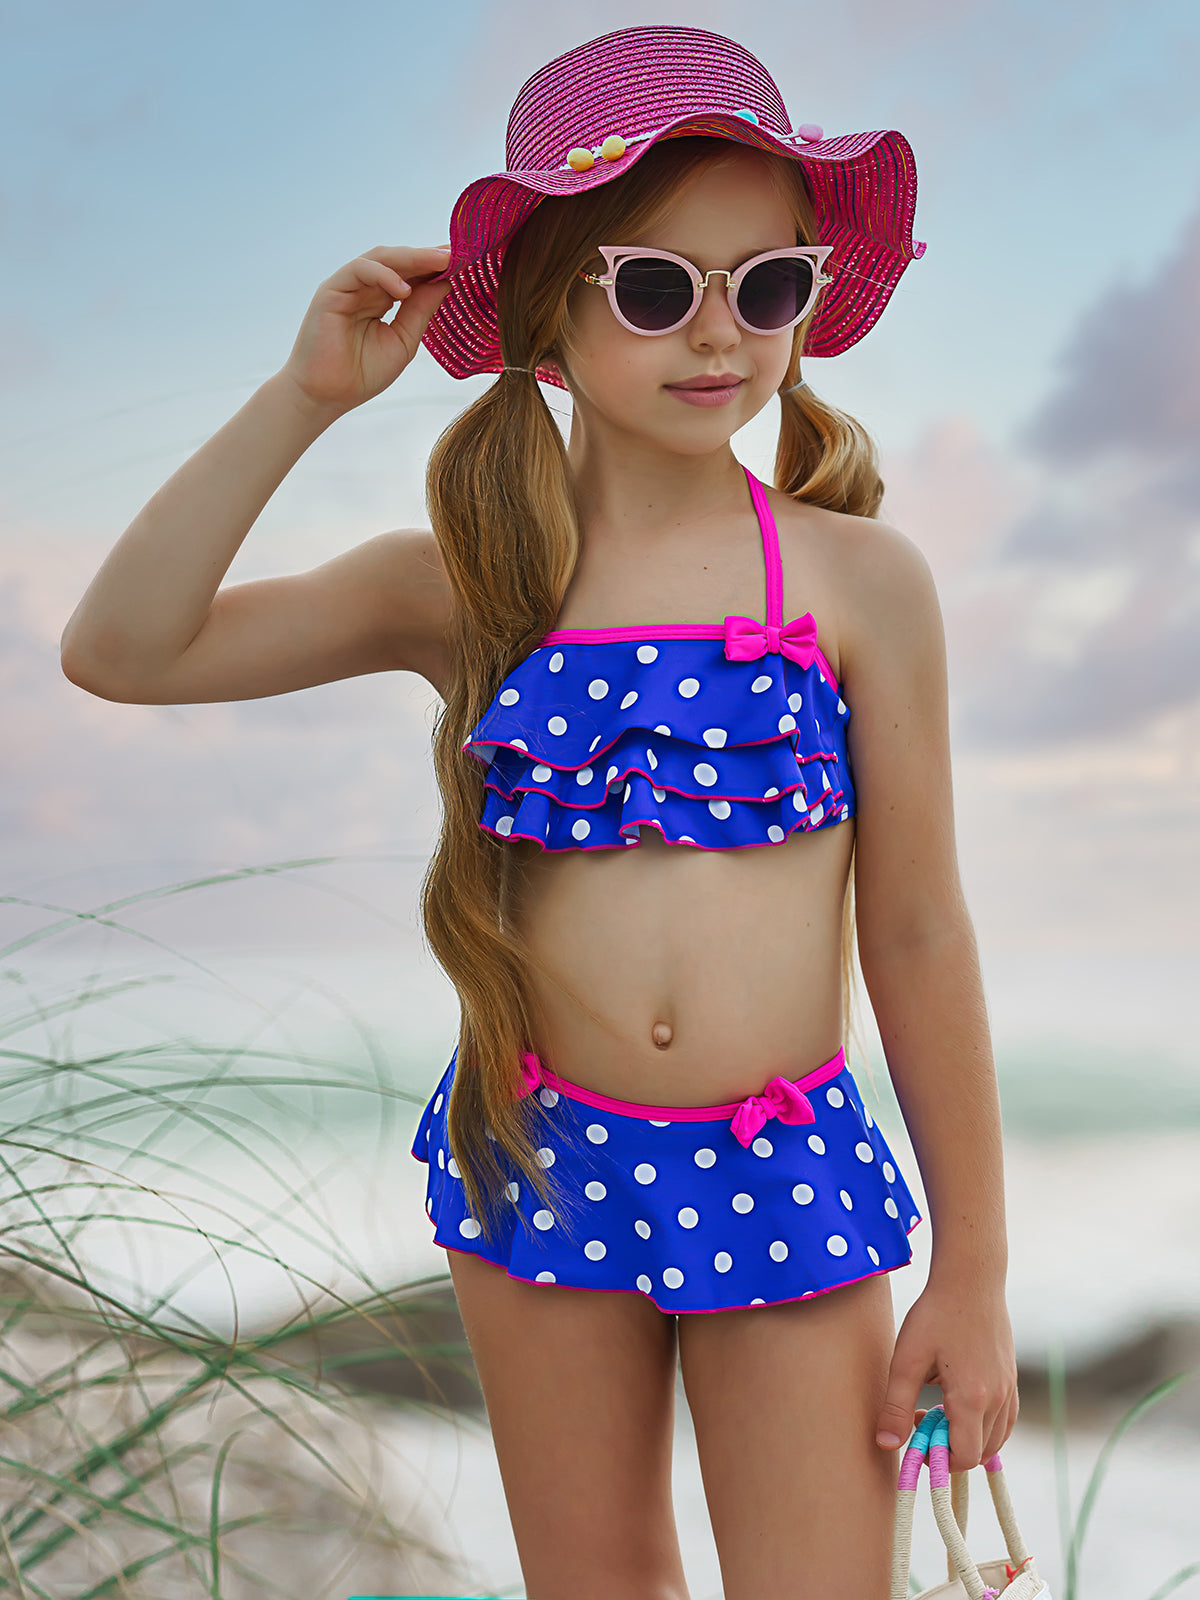 Pink Ruffle Swimsuit - 2 Piece Bathing Suit 10